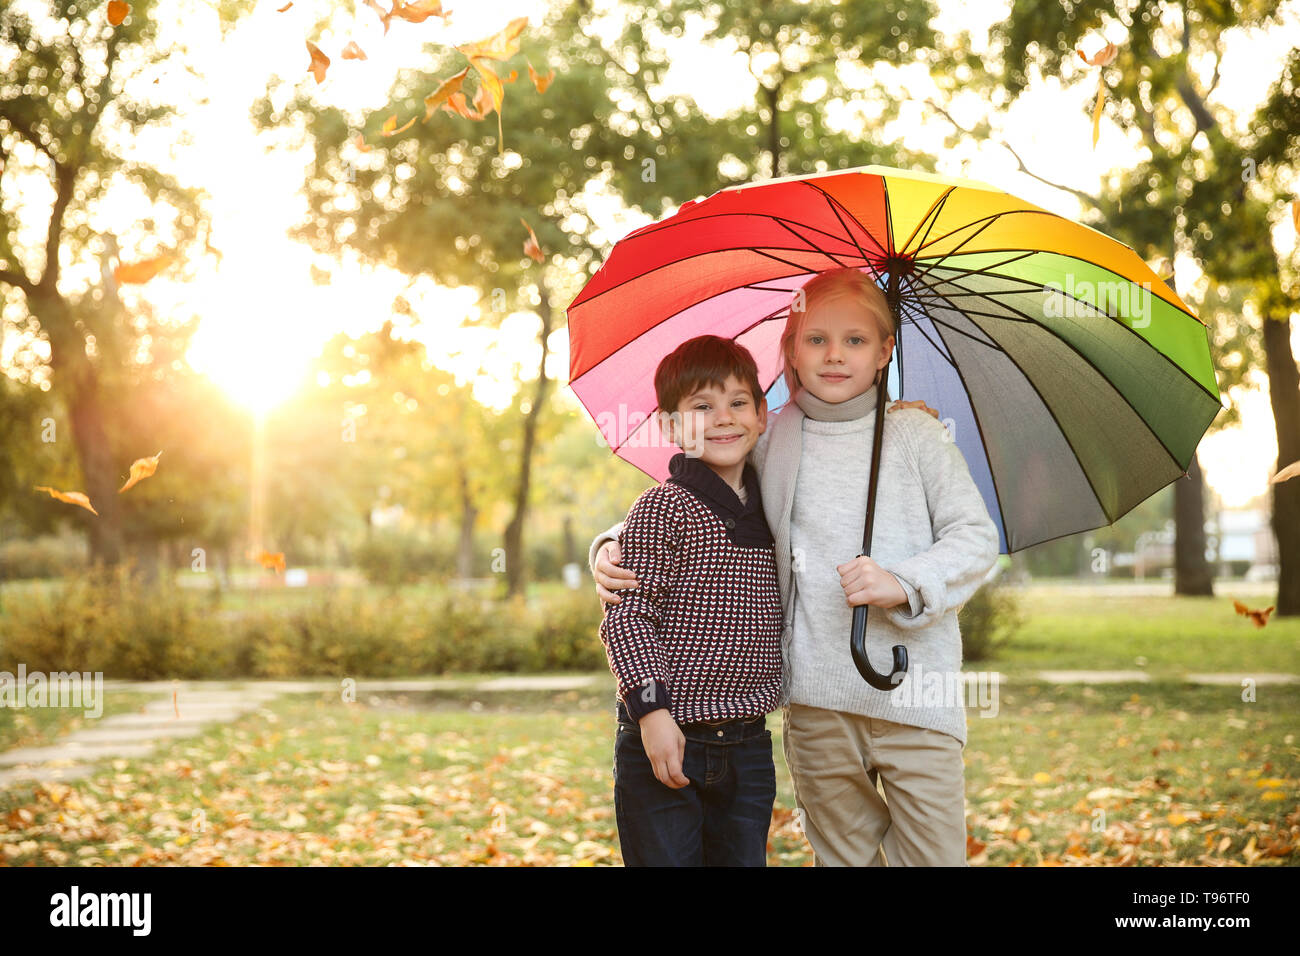 Cute little children with colorful umbrella in autumn park Stock Photo